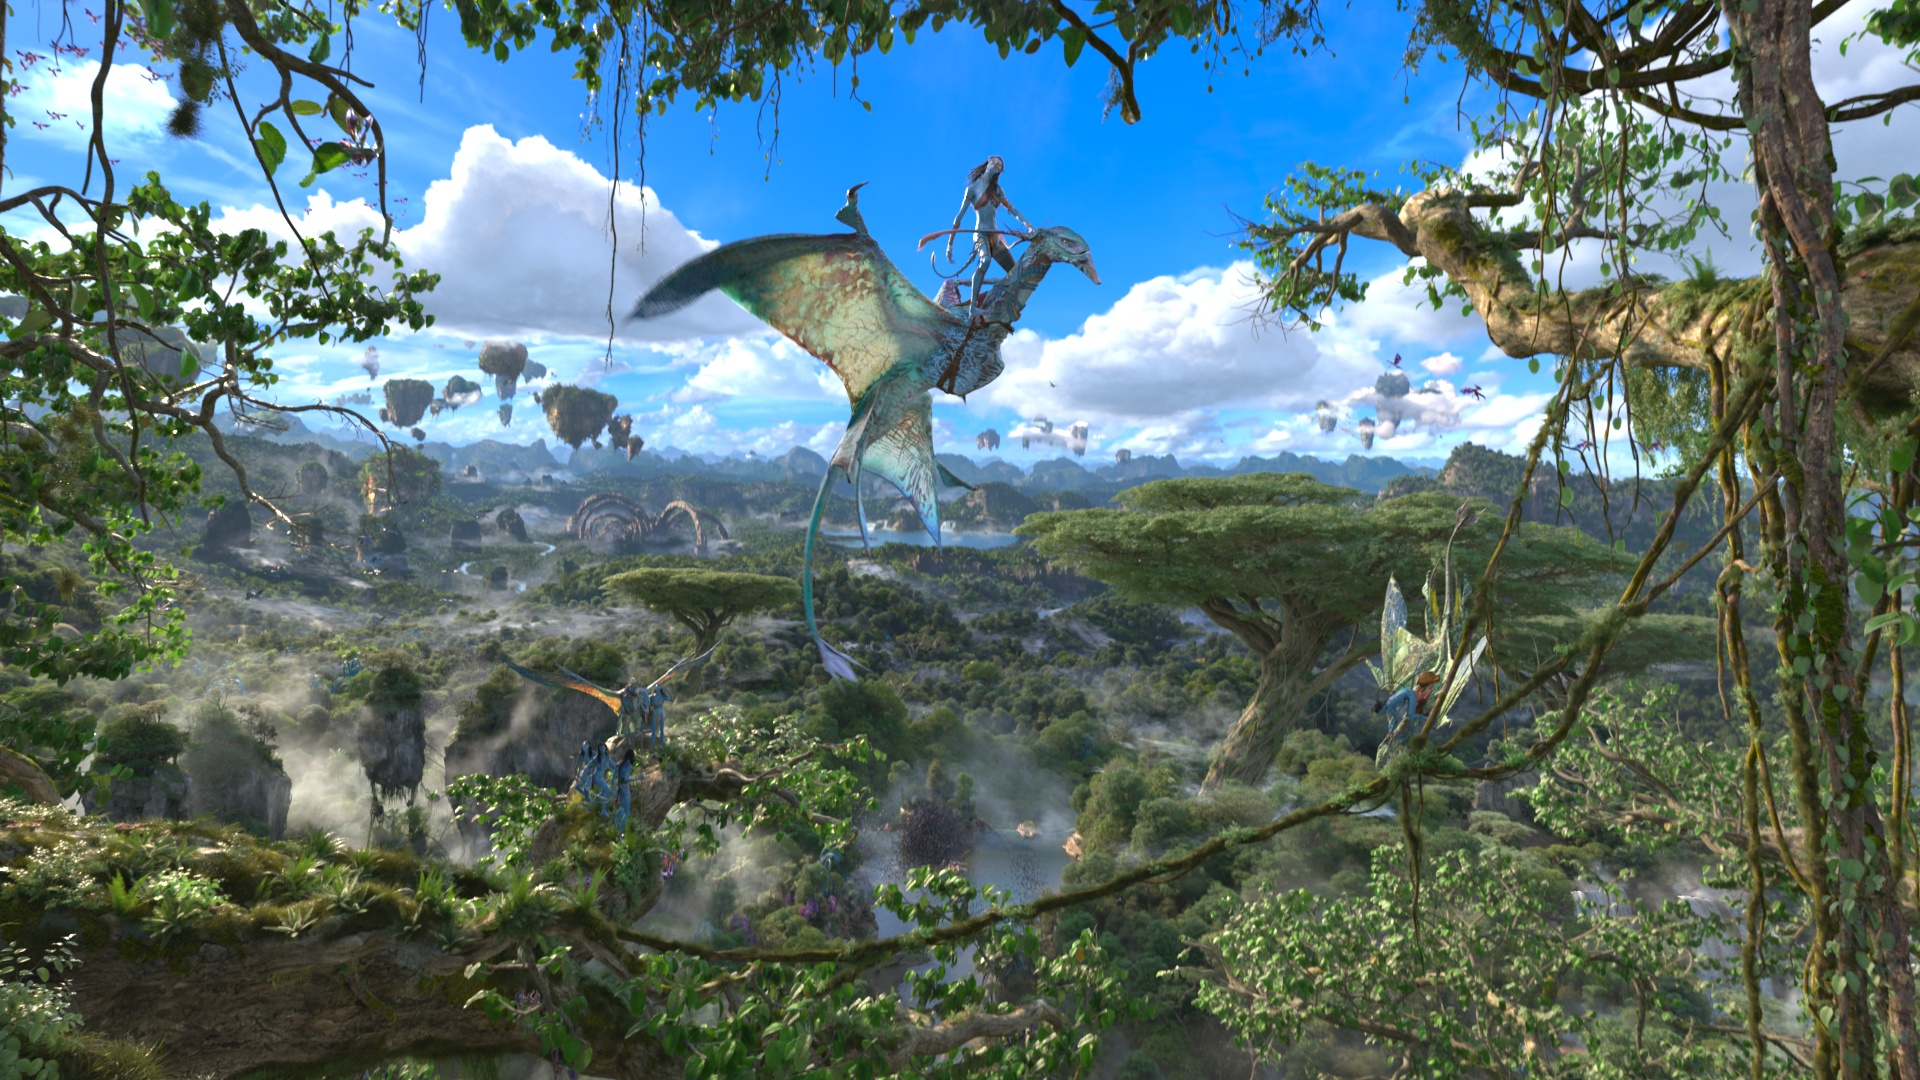 Avatar Flight of Passage on Pandora Ð The World of Avatar at Disney's Animal Kingdom